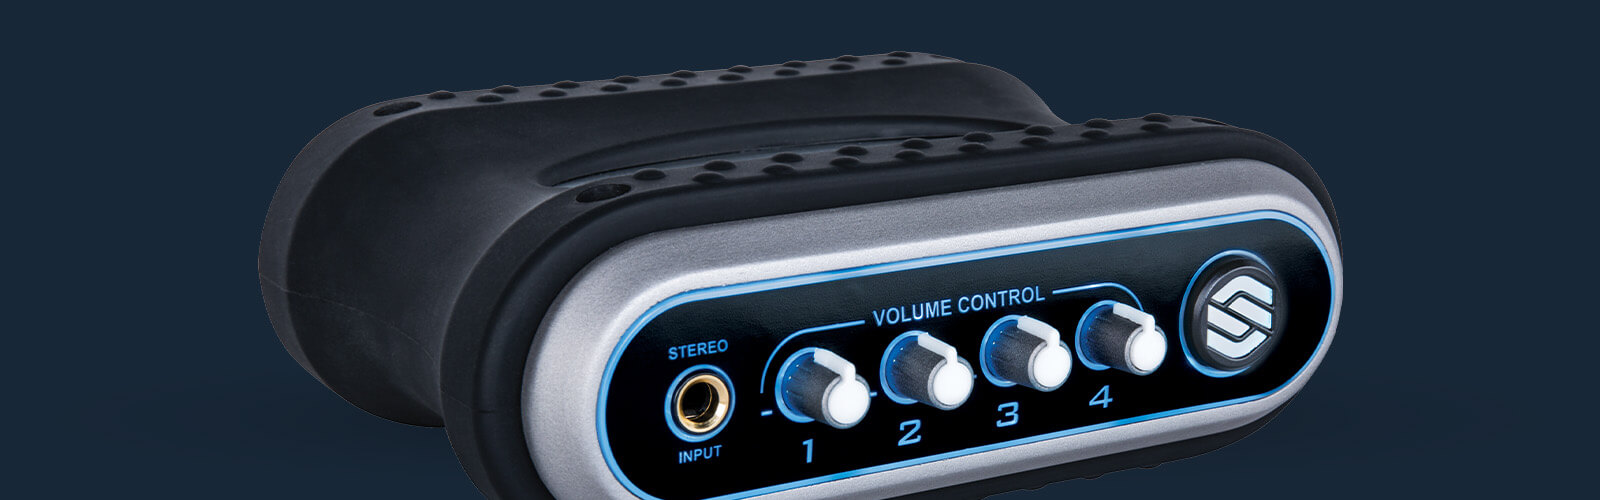 Sterling S204HA Desktop 4-channel headphone amplifier right on blue background close up.